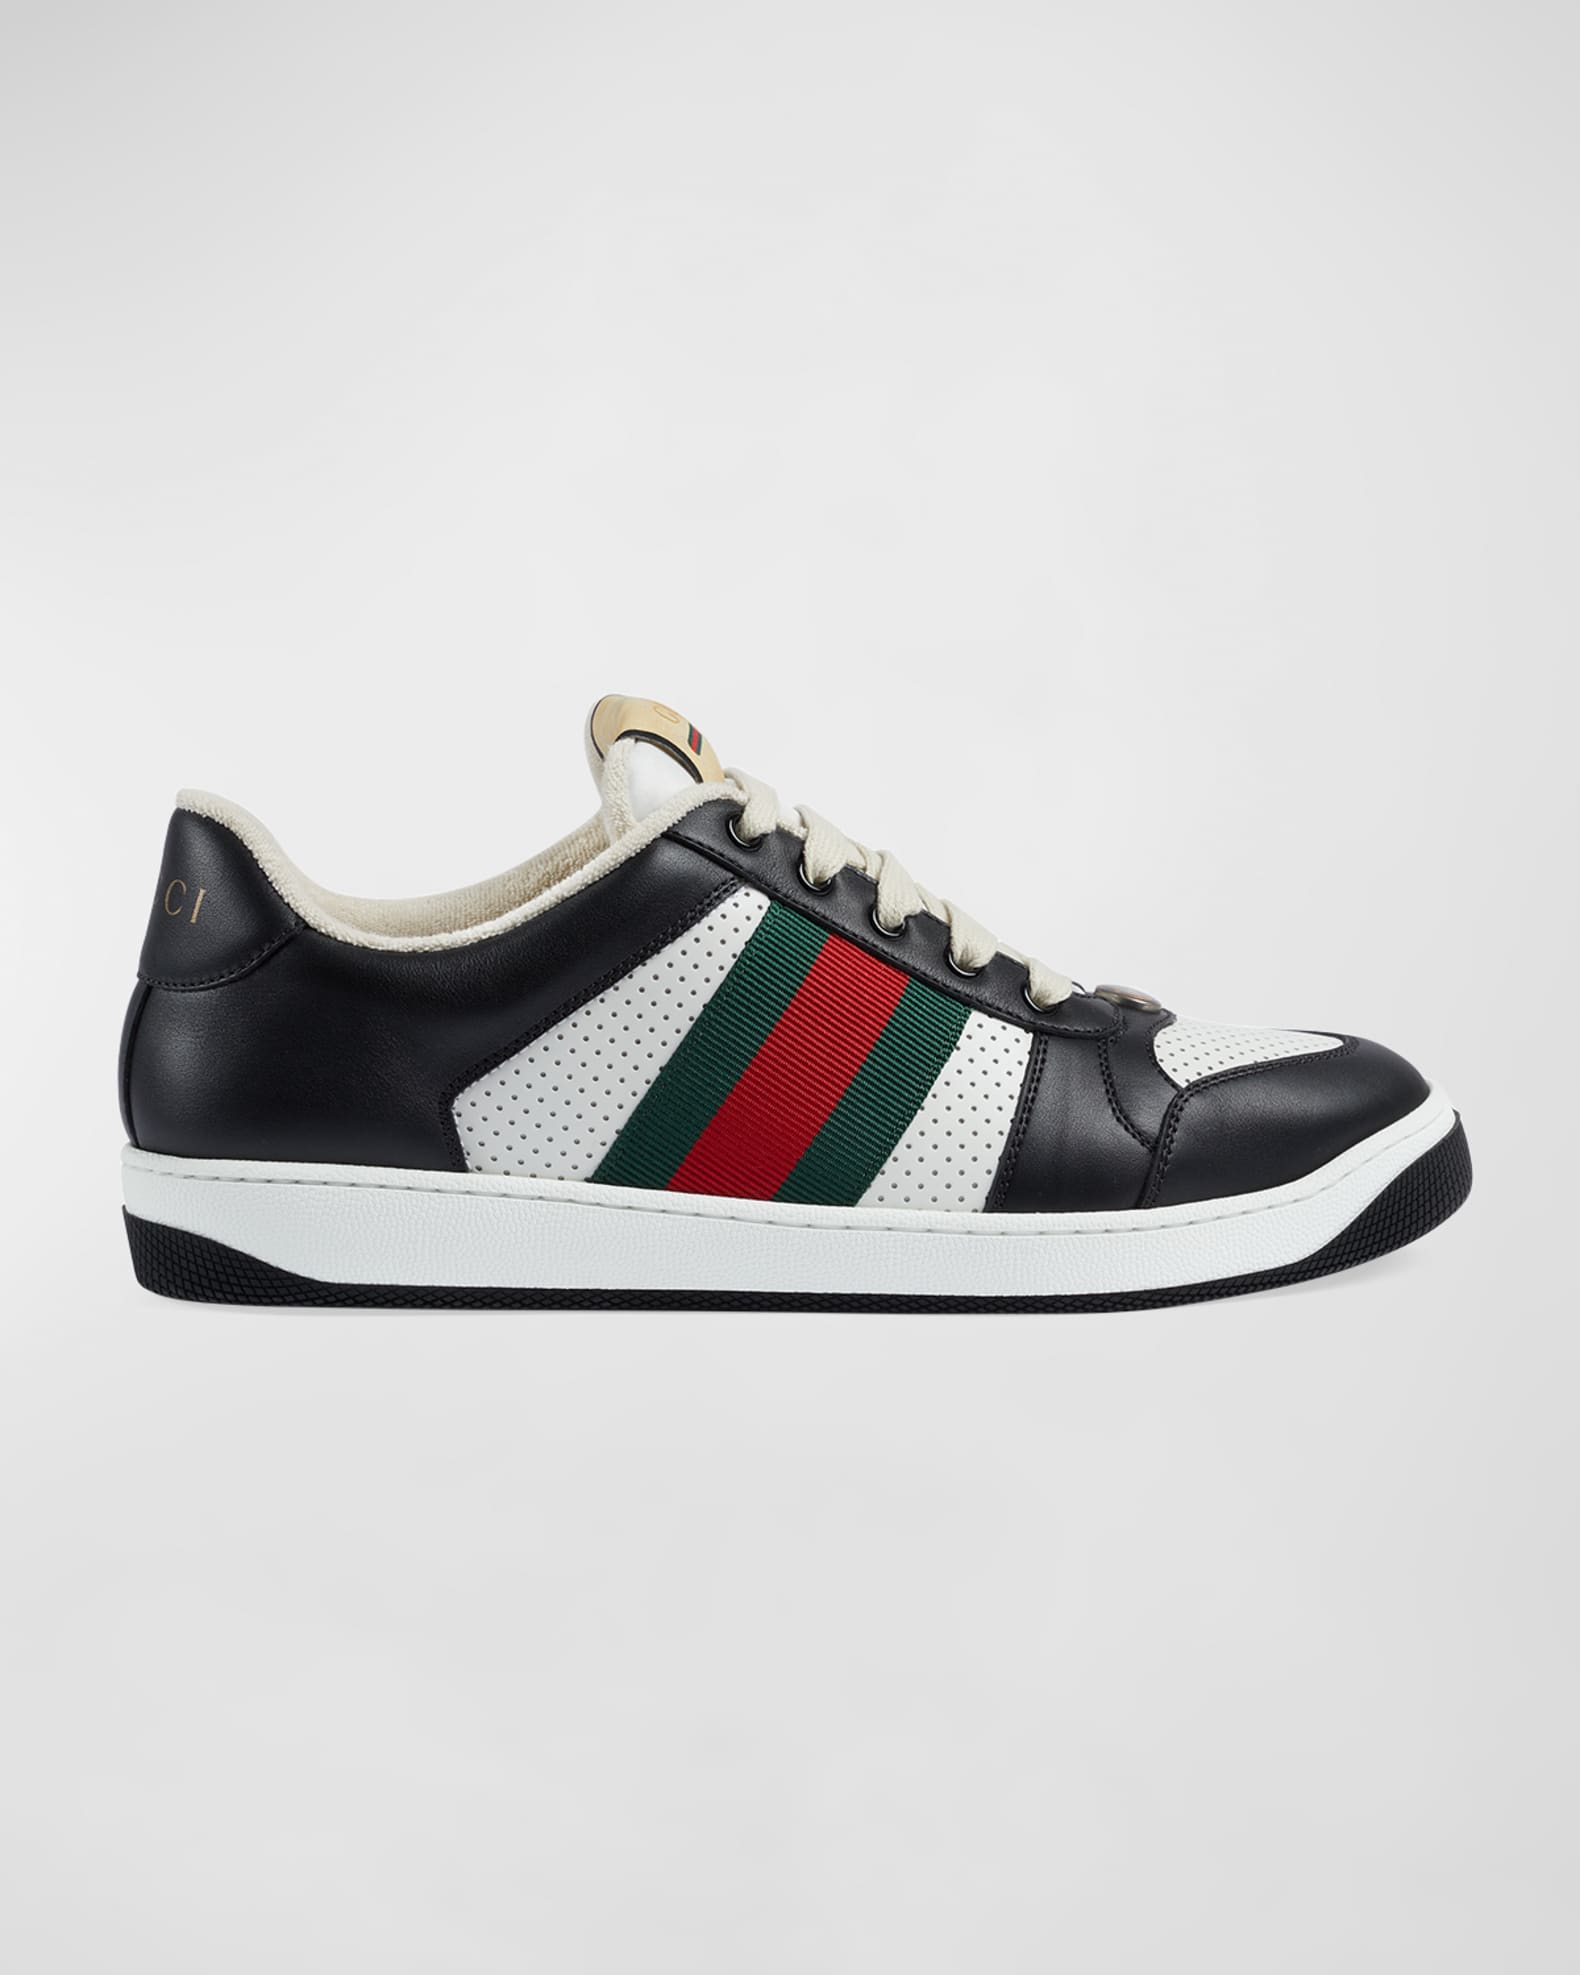 Gucci Men's Screener Signature Web Leather Low-Top Sneakers | Neiman Marcus